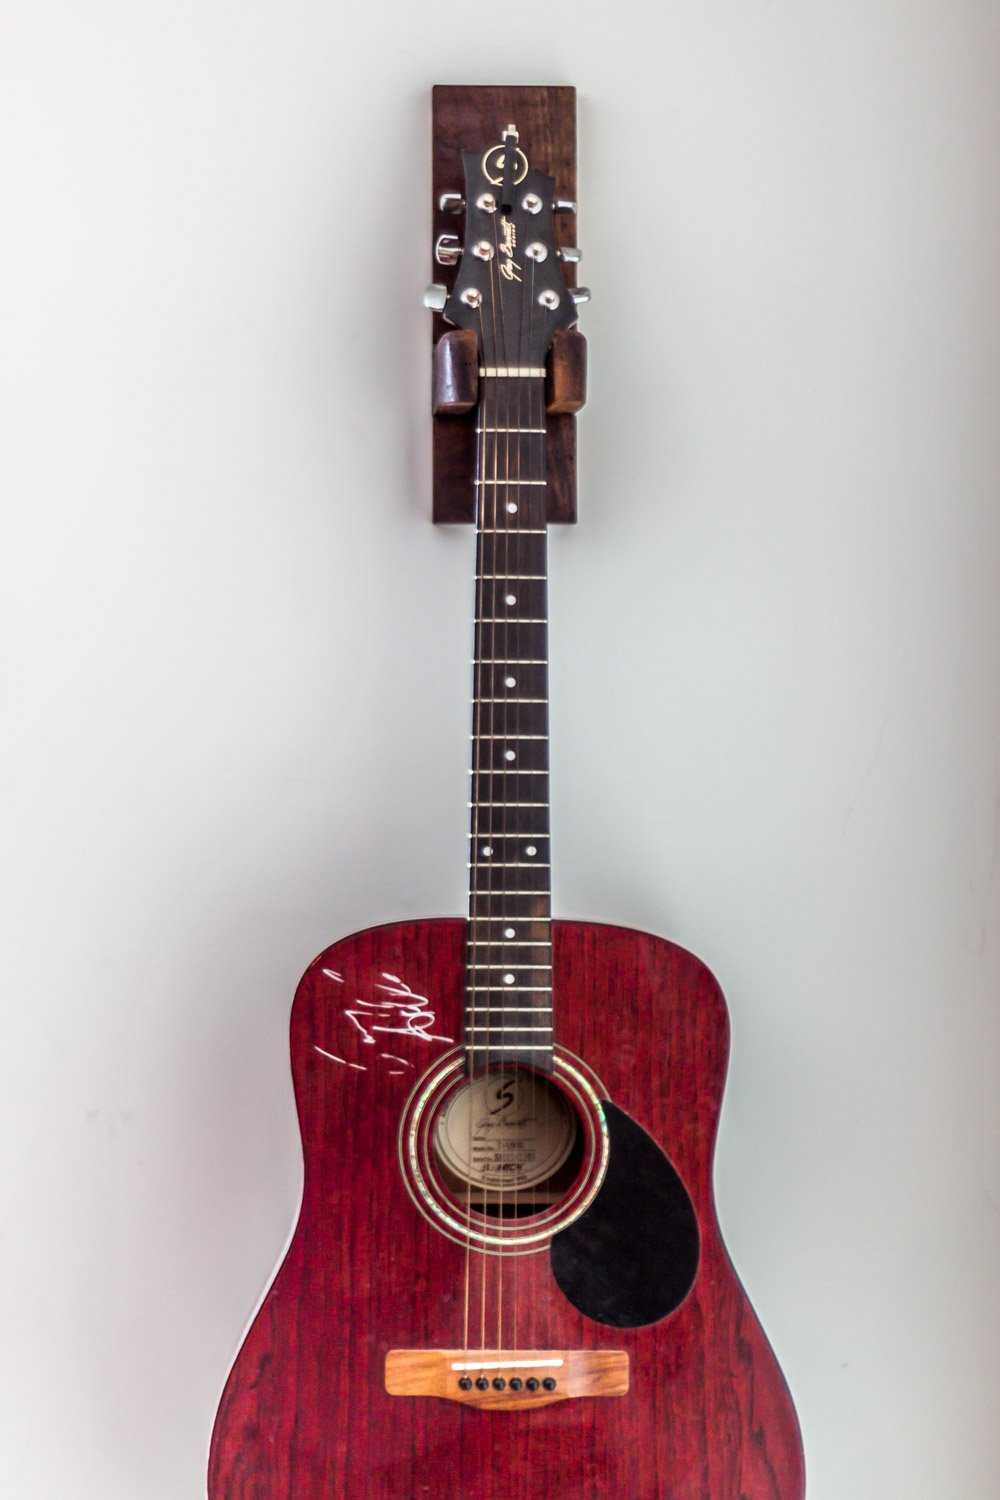 No. 515 Guitar Hanger from Walnut Barn Wood 